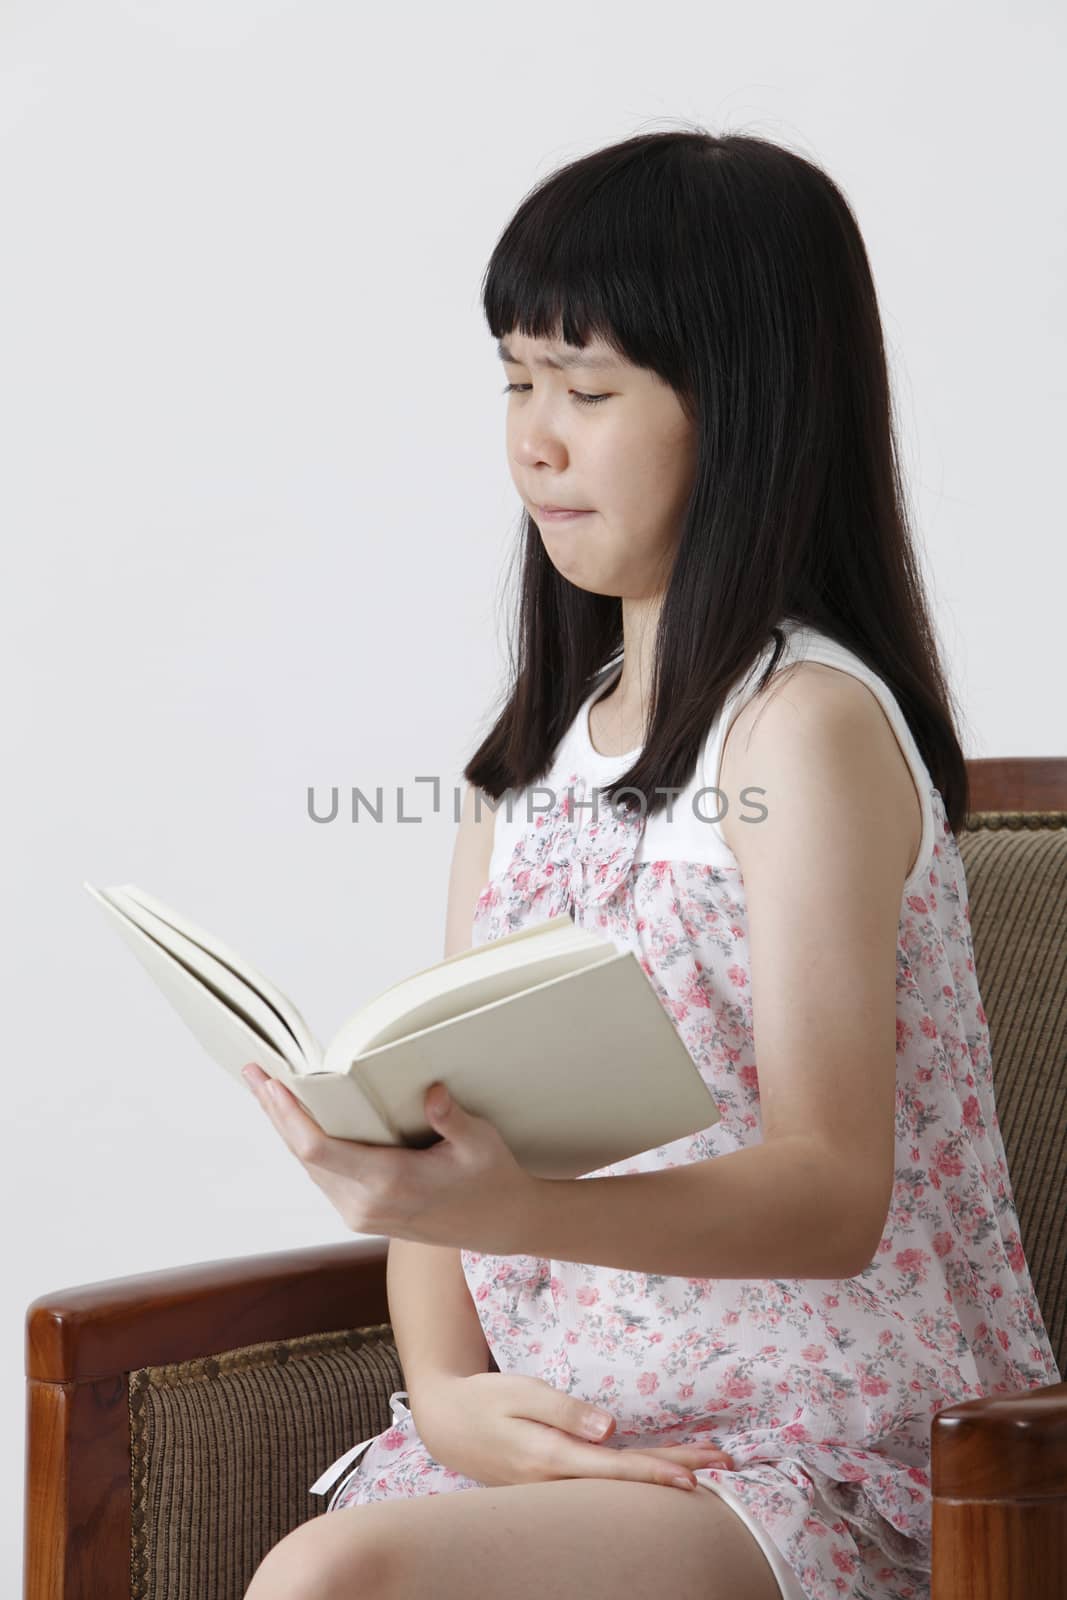 chinese girl reading horror story